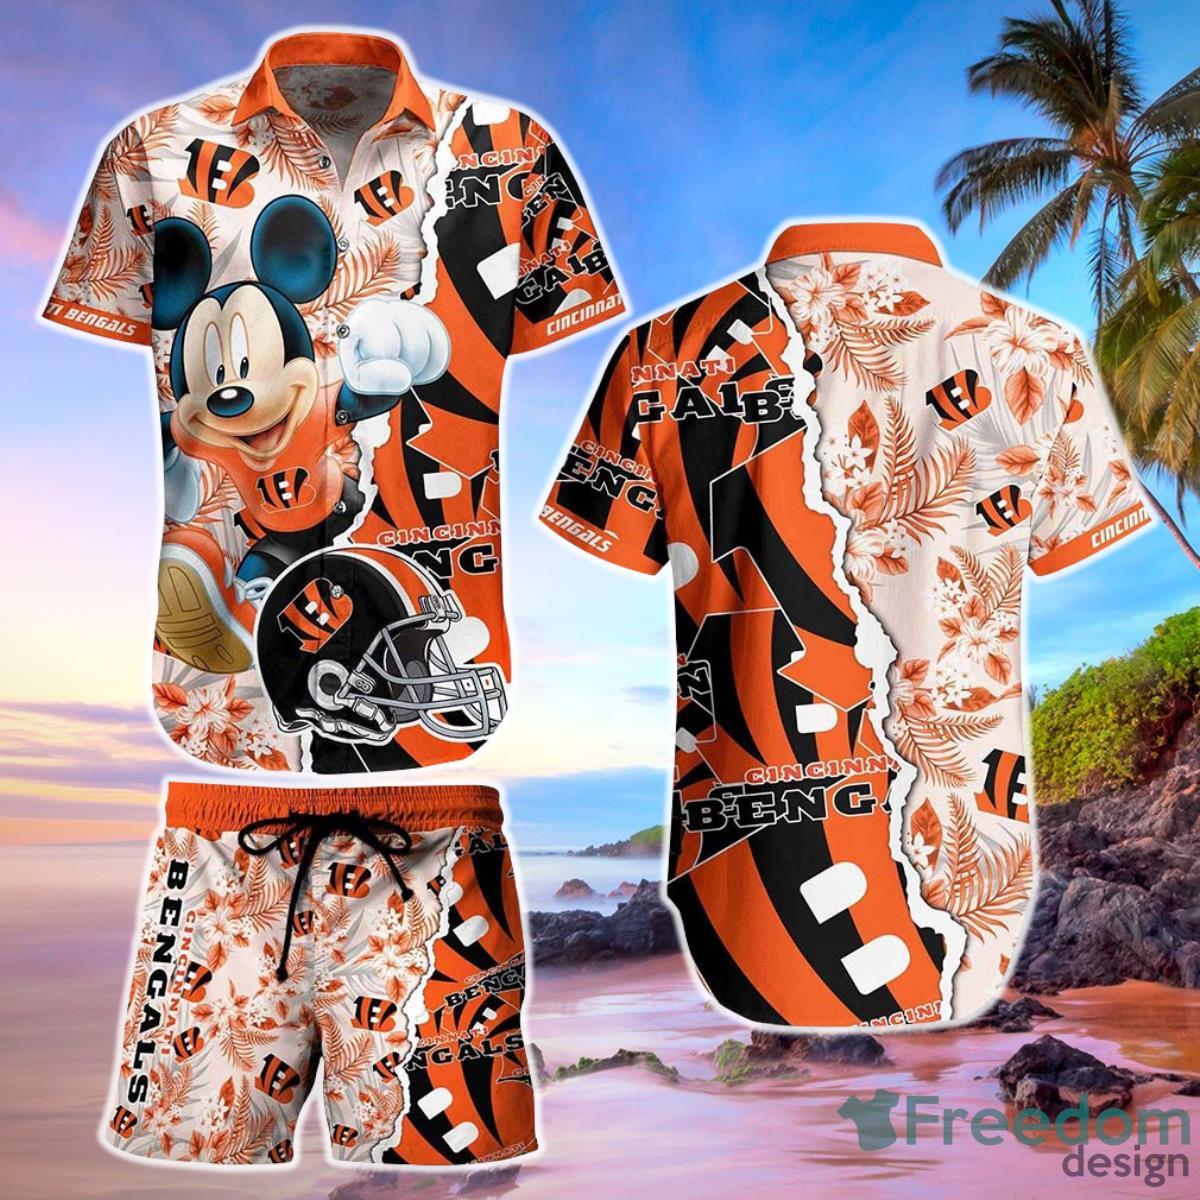 Cincinnati Bengals NFL Design 1 Beach Hawaiian Shirt Men And Women For Fans  Gift - Freedomdesign